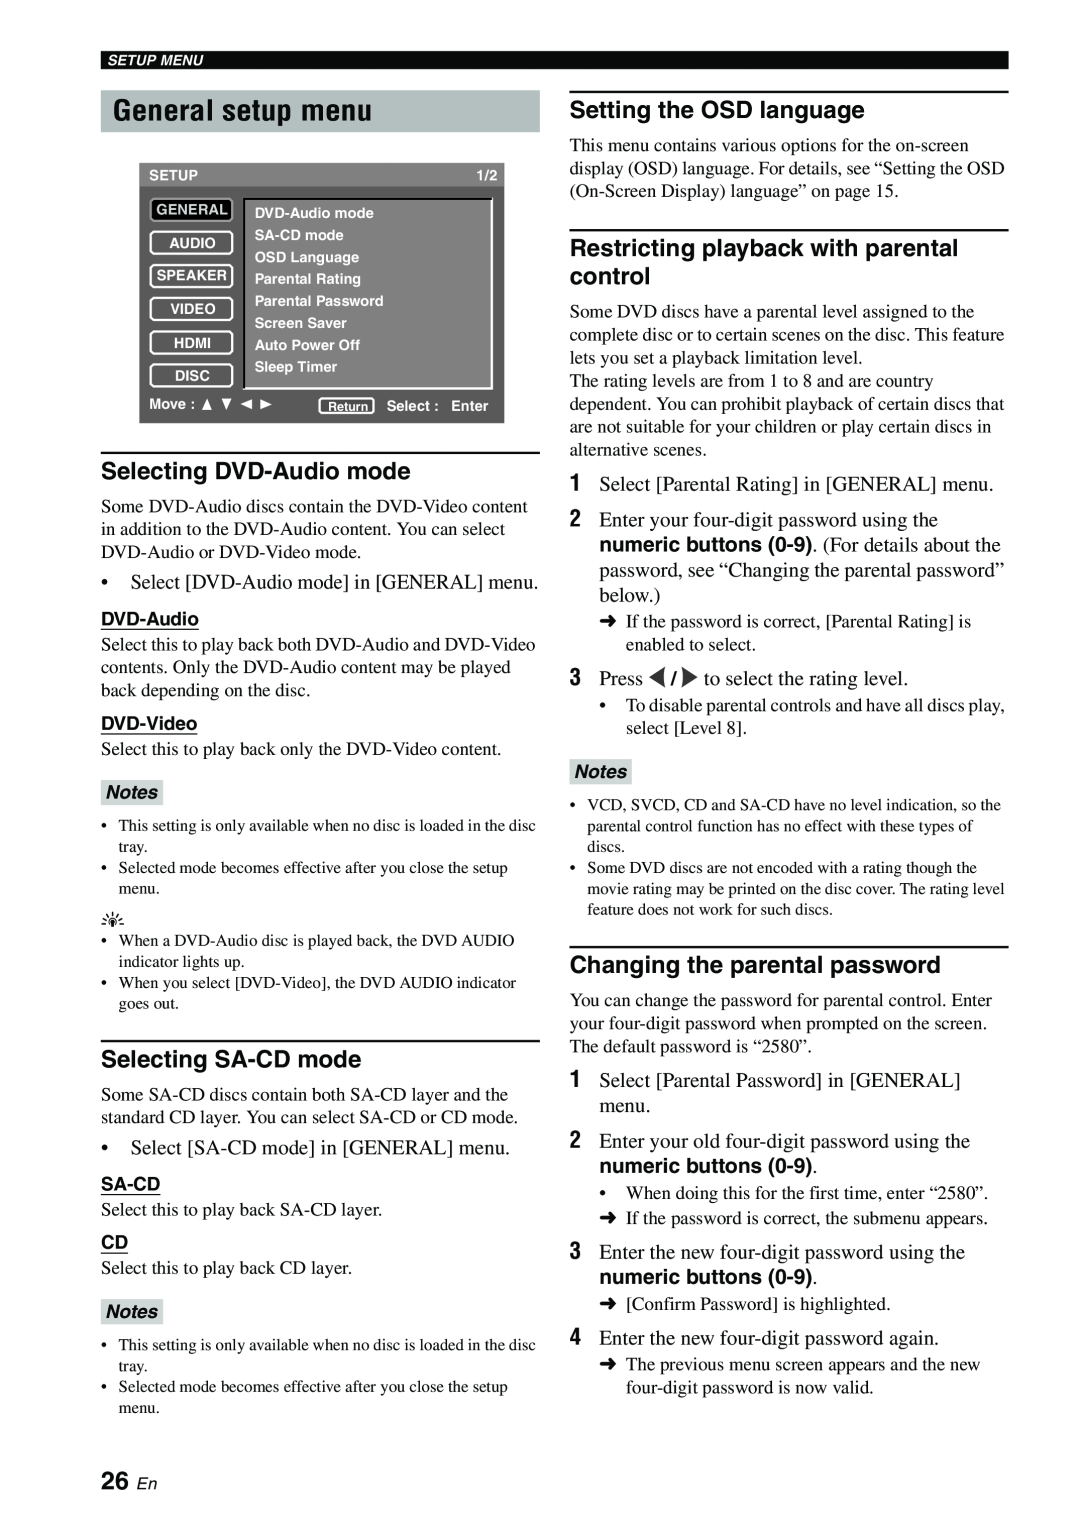 Yamaha DVD-S1700B manual General setup menu, 26 En, Selecting DVD-Audiomode, Selecting SA-CDmode, Setting the OSD language 